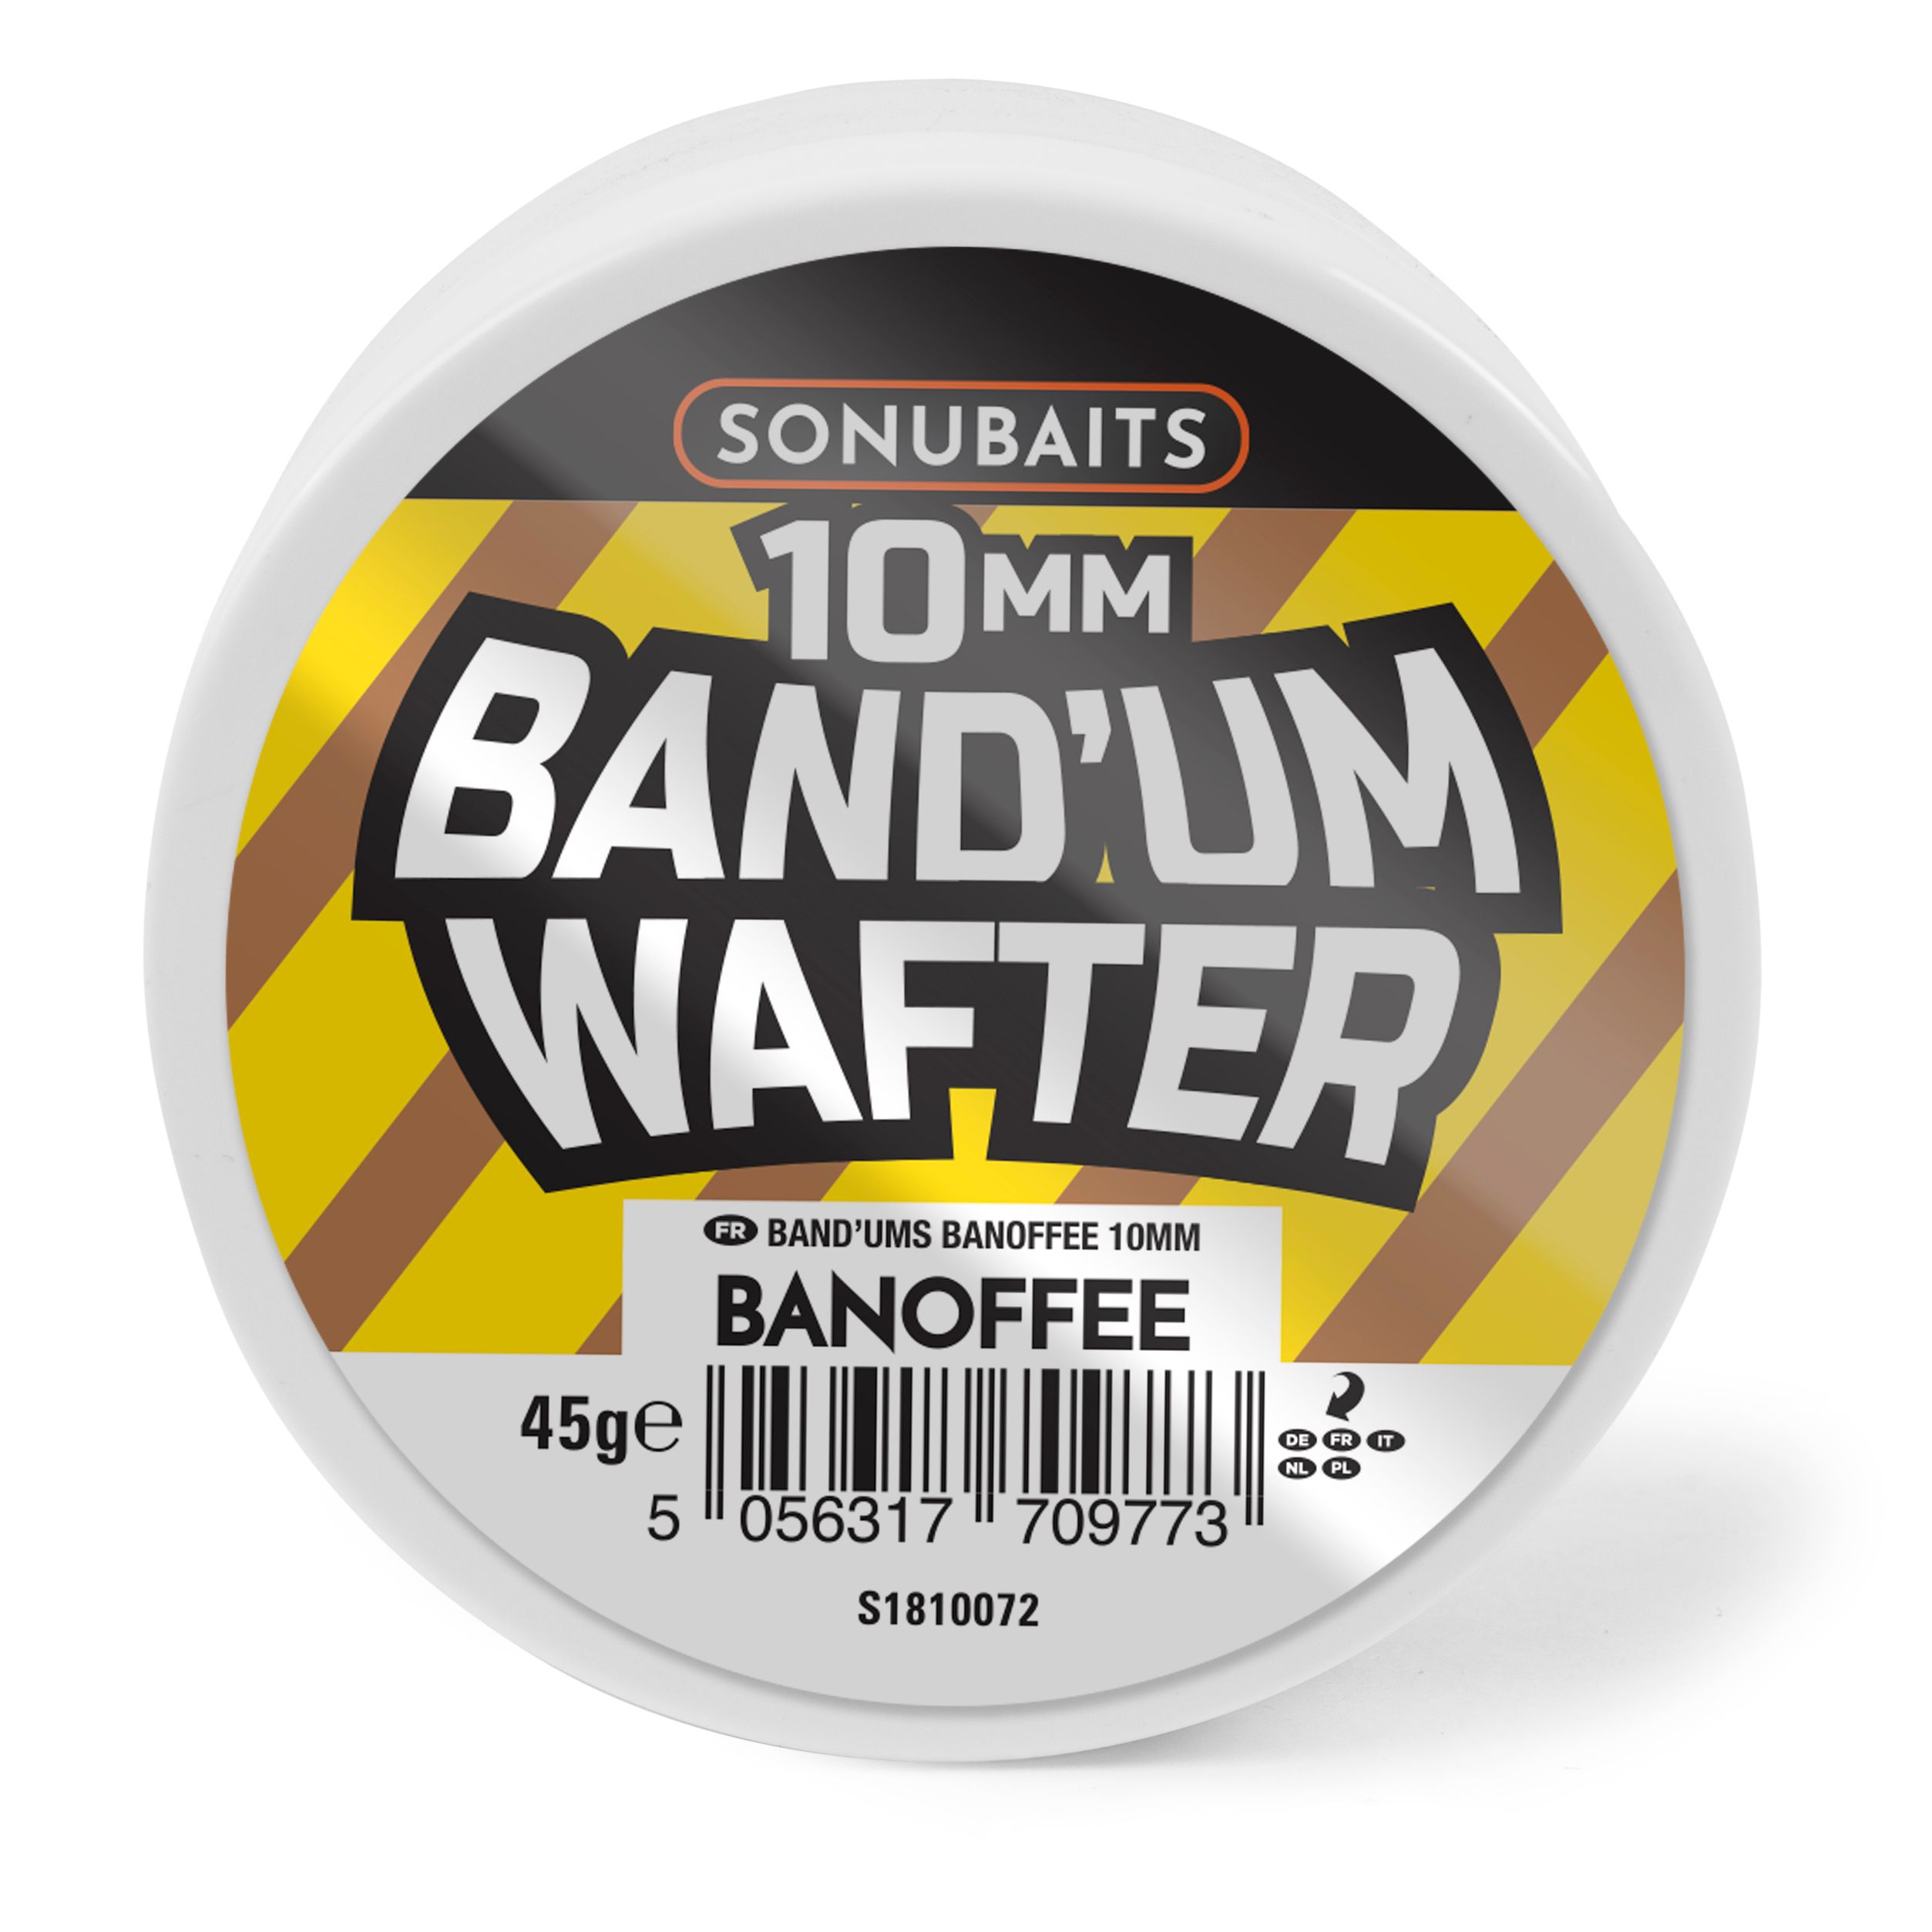 Sonubaits Band'um Wafters 10mm - Banoffee